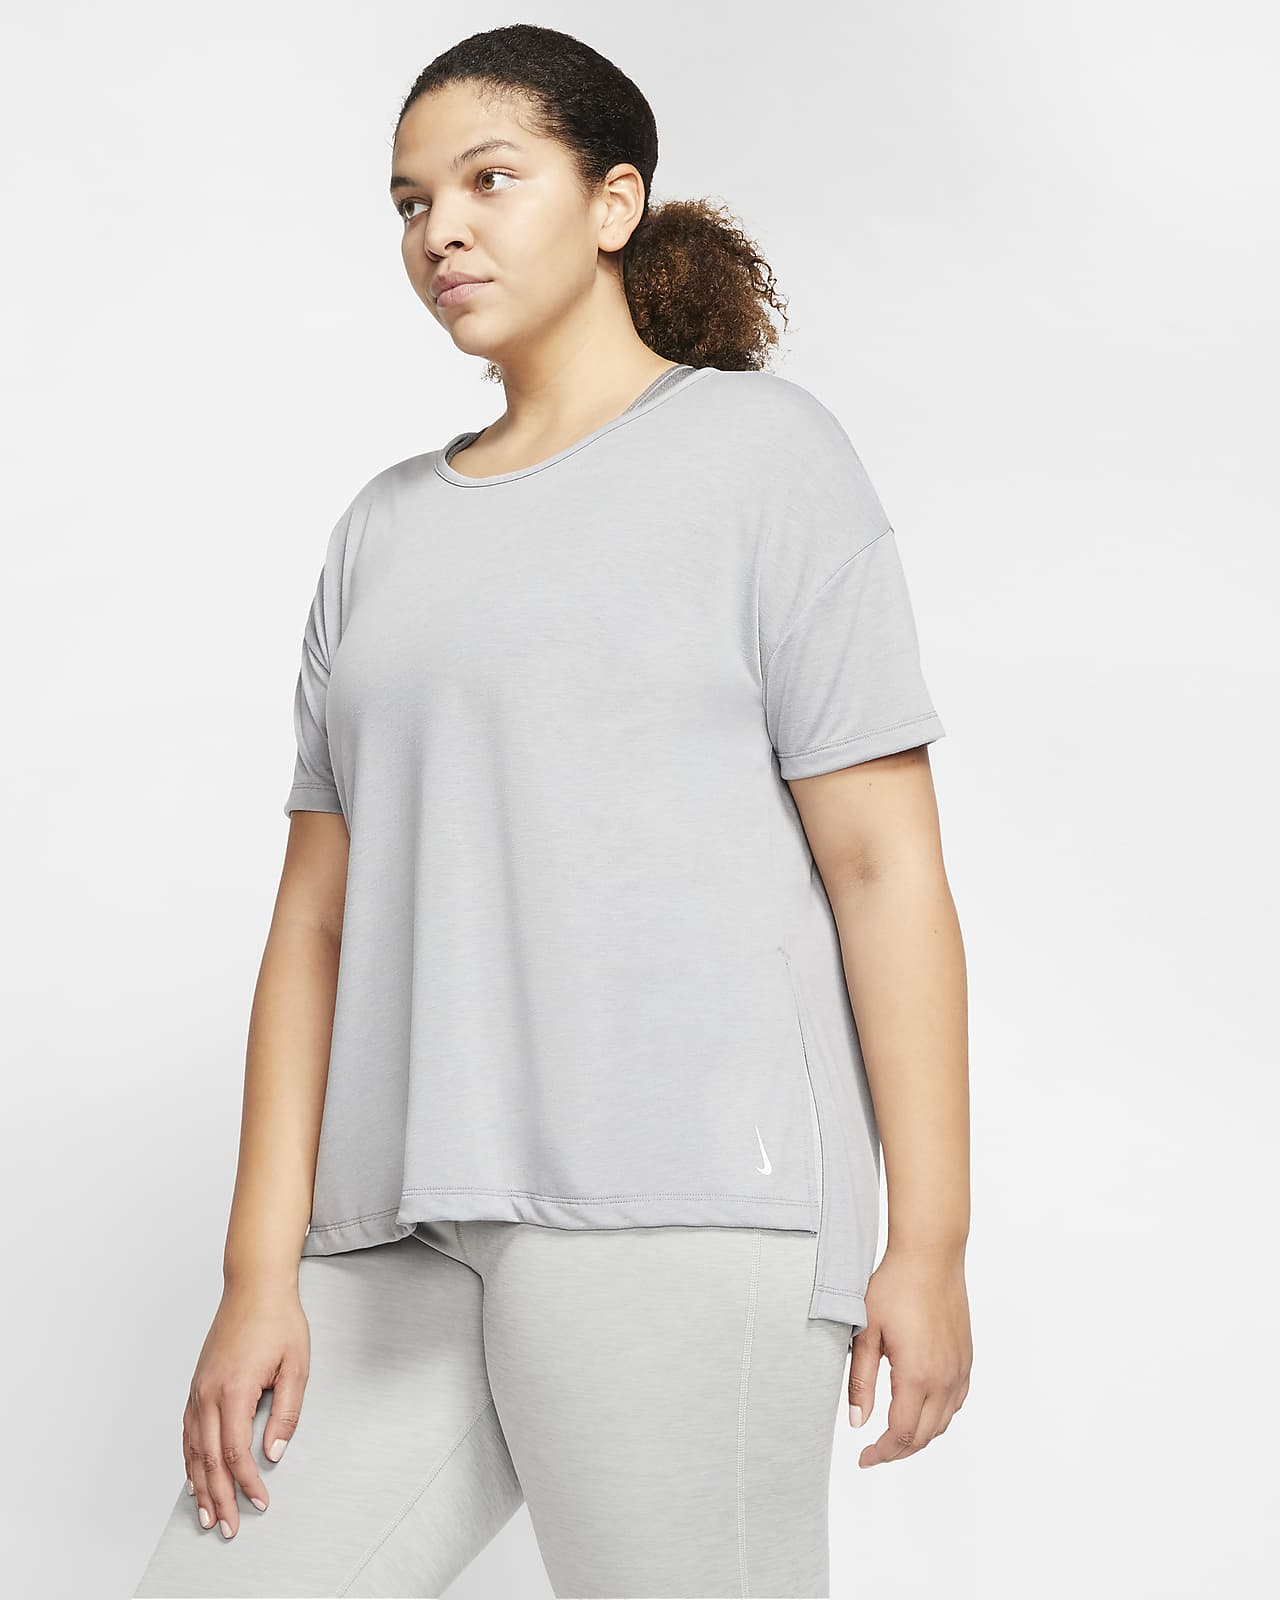 Nike Yoga Women's Short-Sleeve Top 